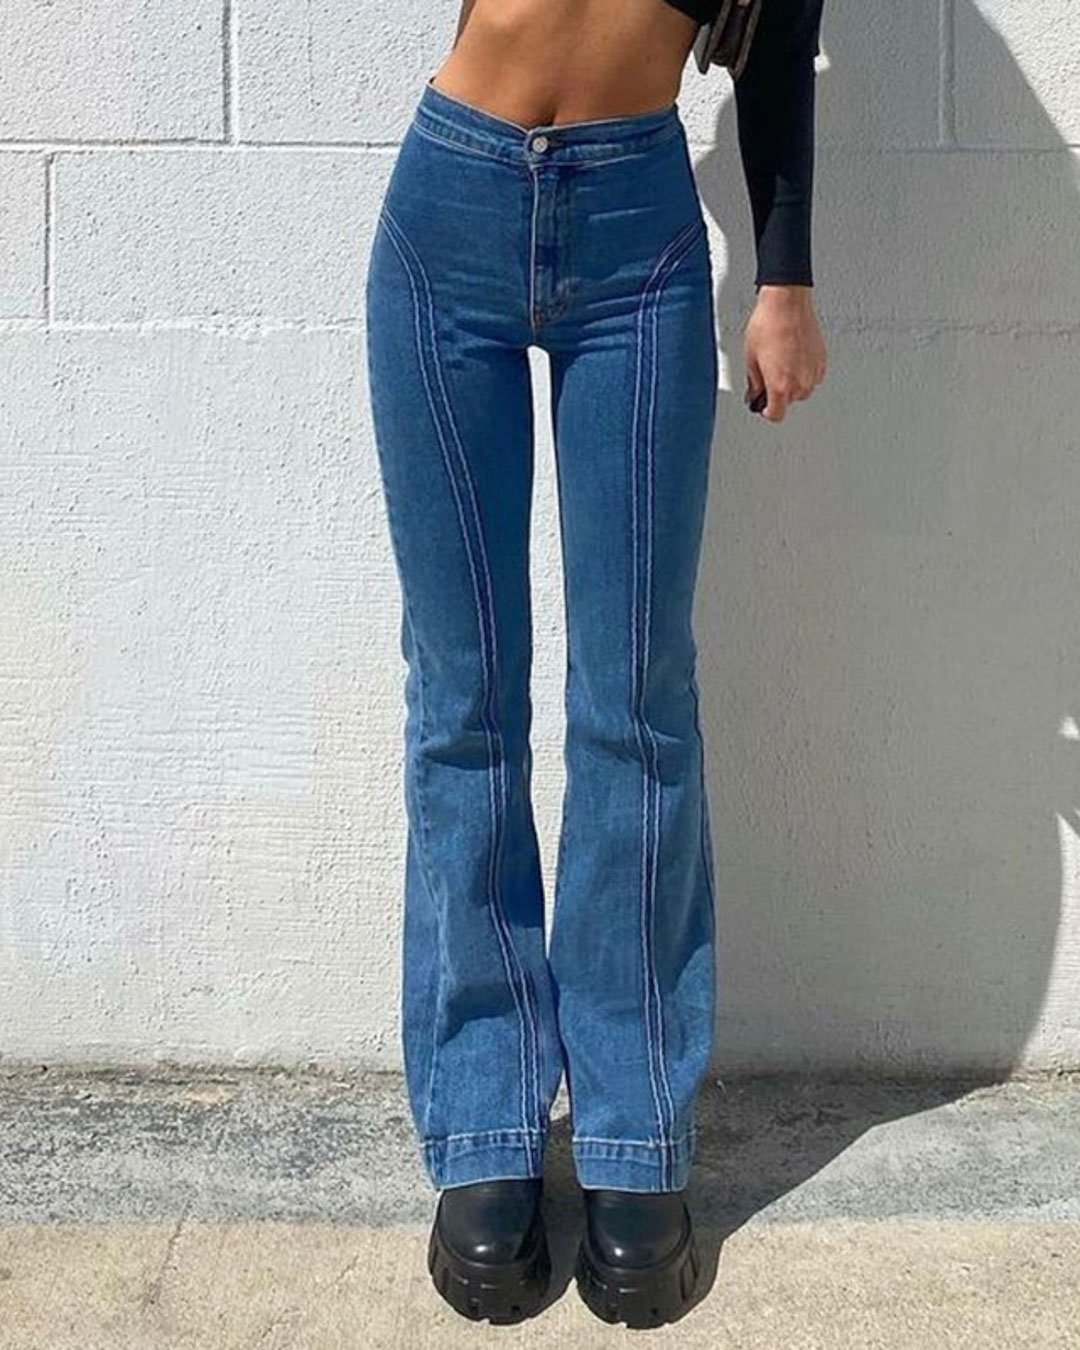 Fashionv-Retro Mid-rise Double Stitch Paneled Bootcut Jeans